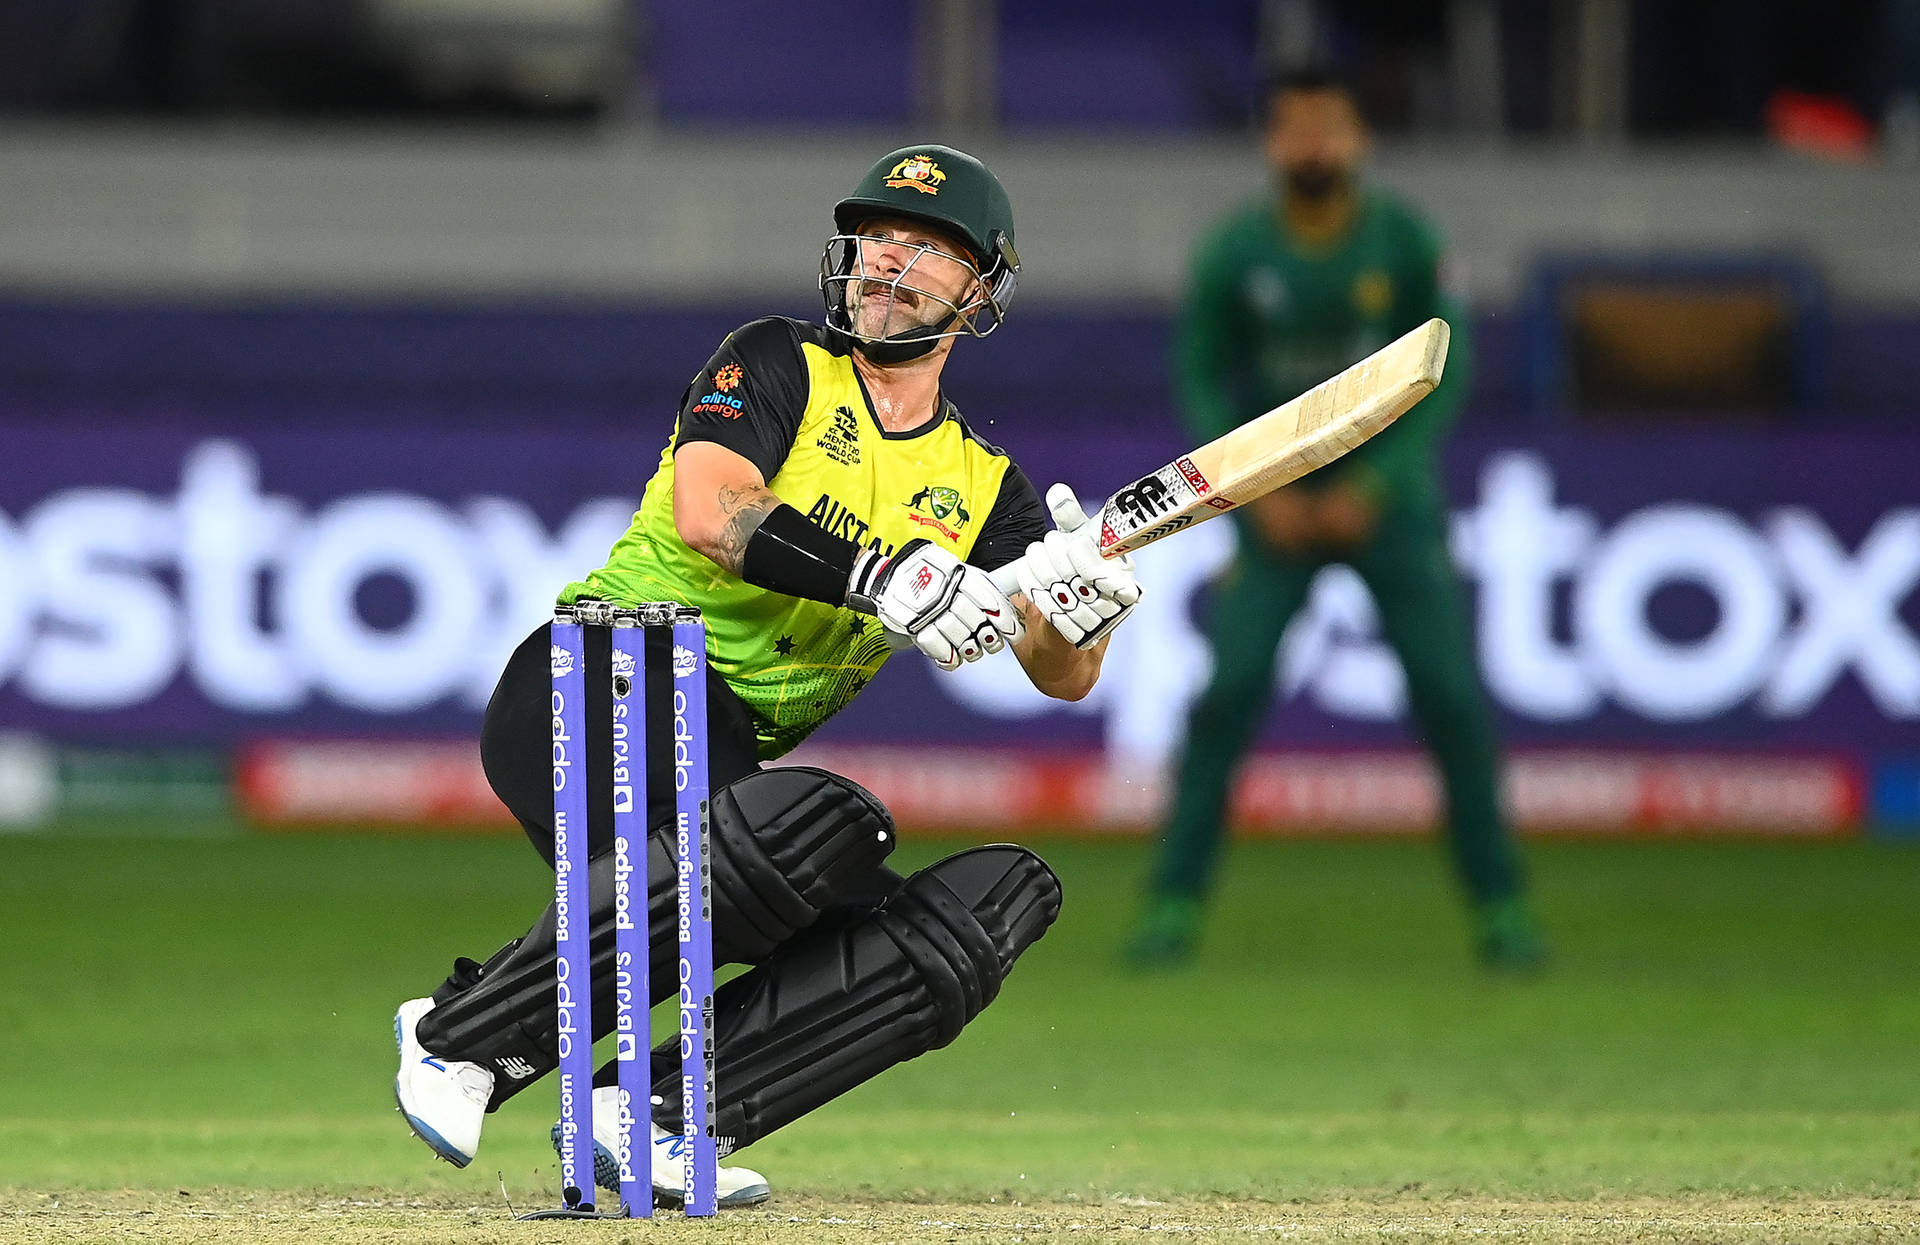 Captivating Action Shot Of Australia Cricket Player, Matthew Wade Background